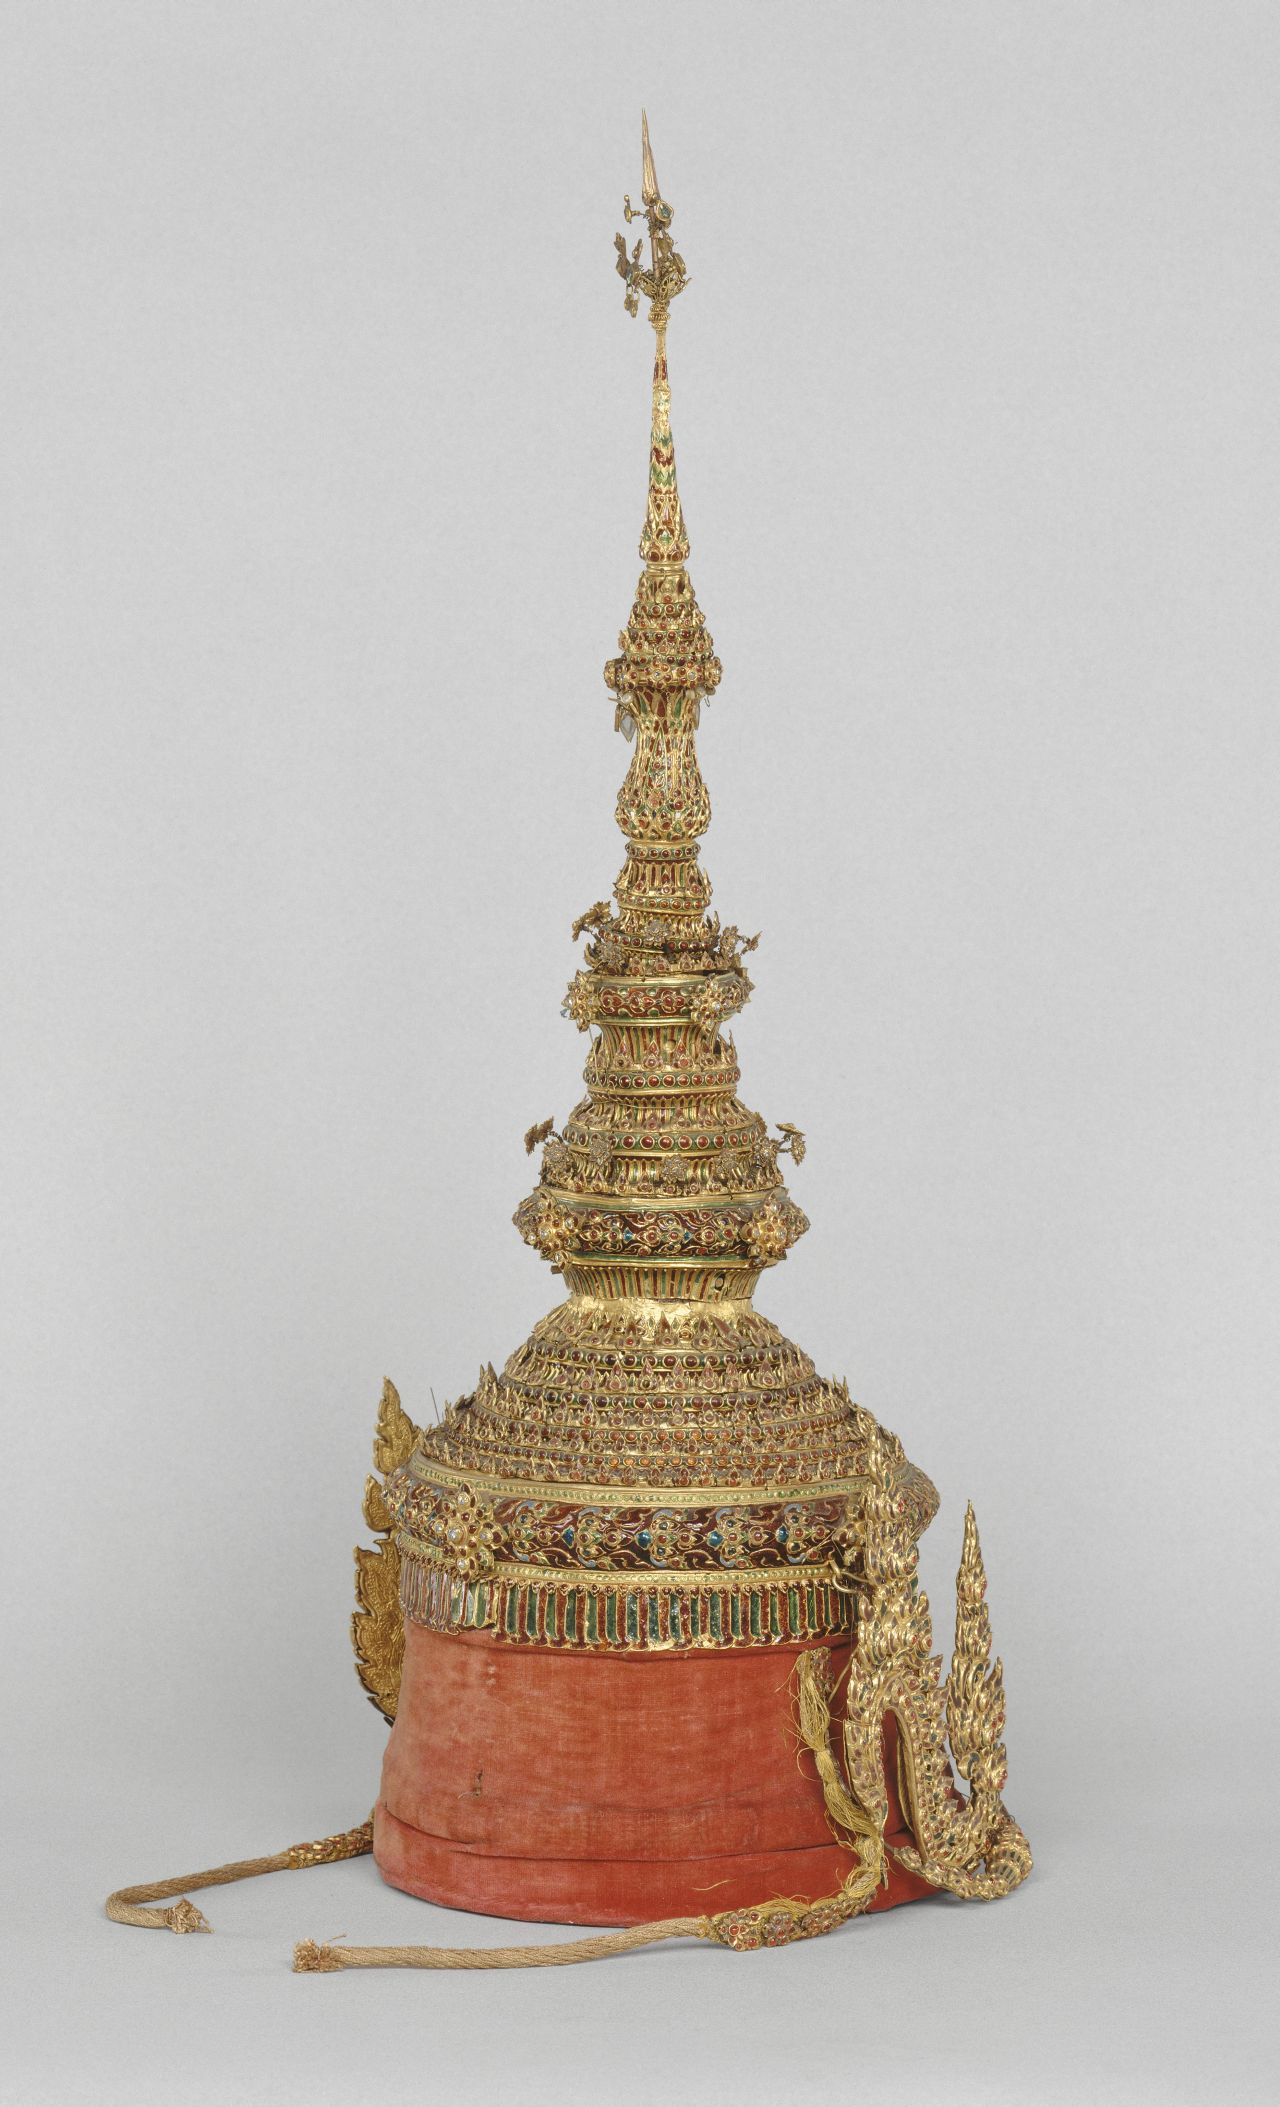 (c) A Replica of Royal Thai Crown